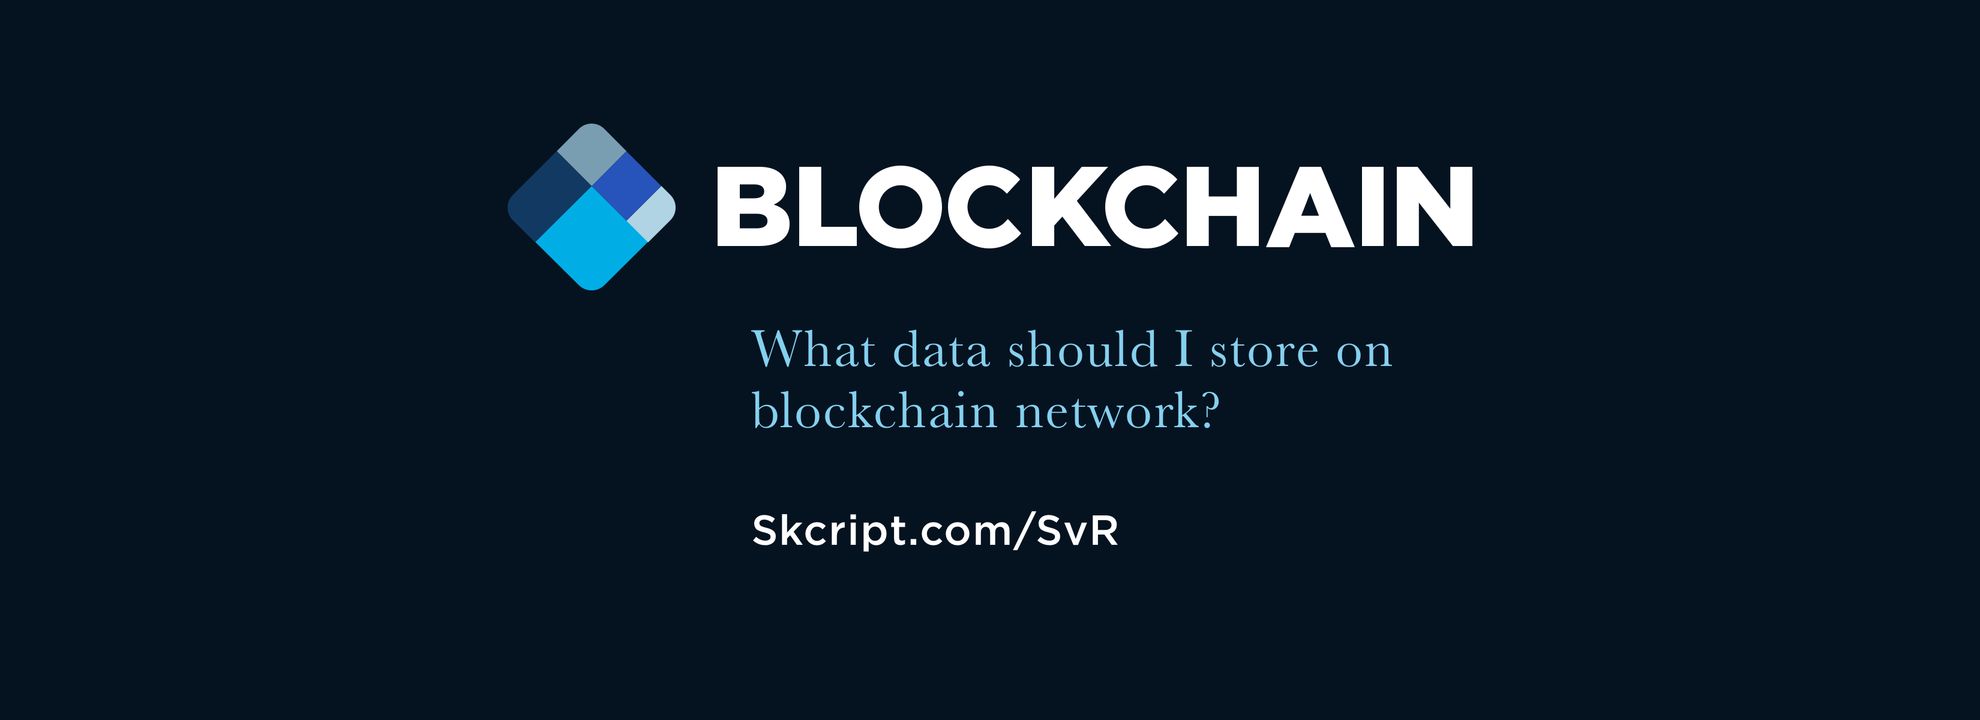 What data should I store on blockchain?